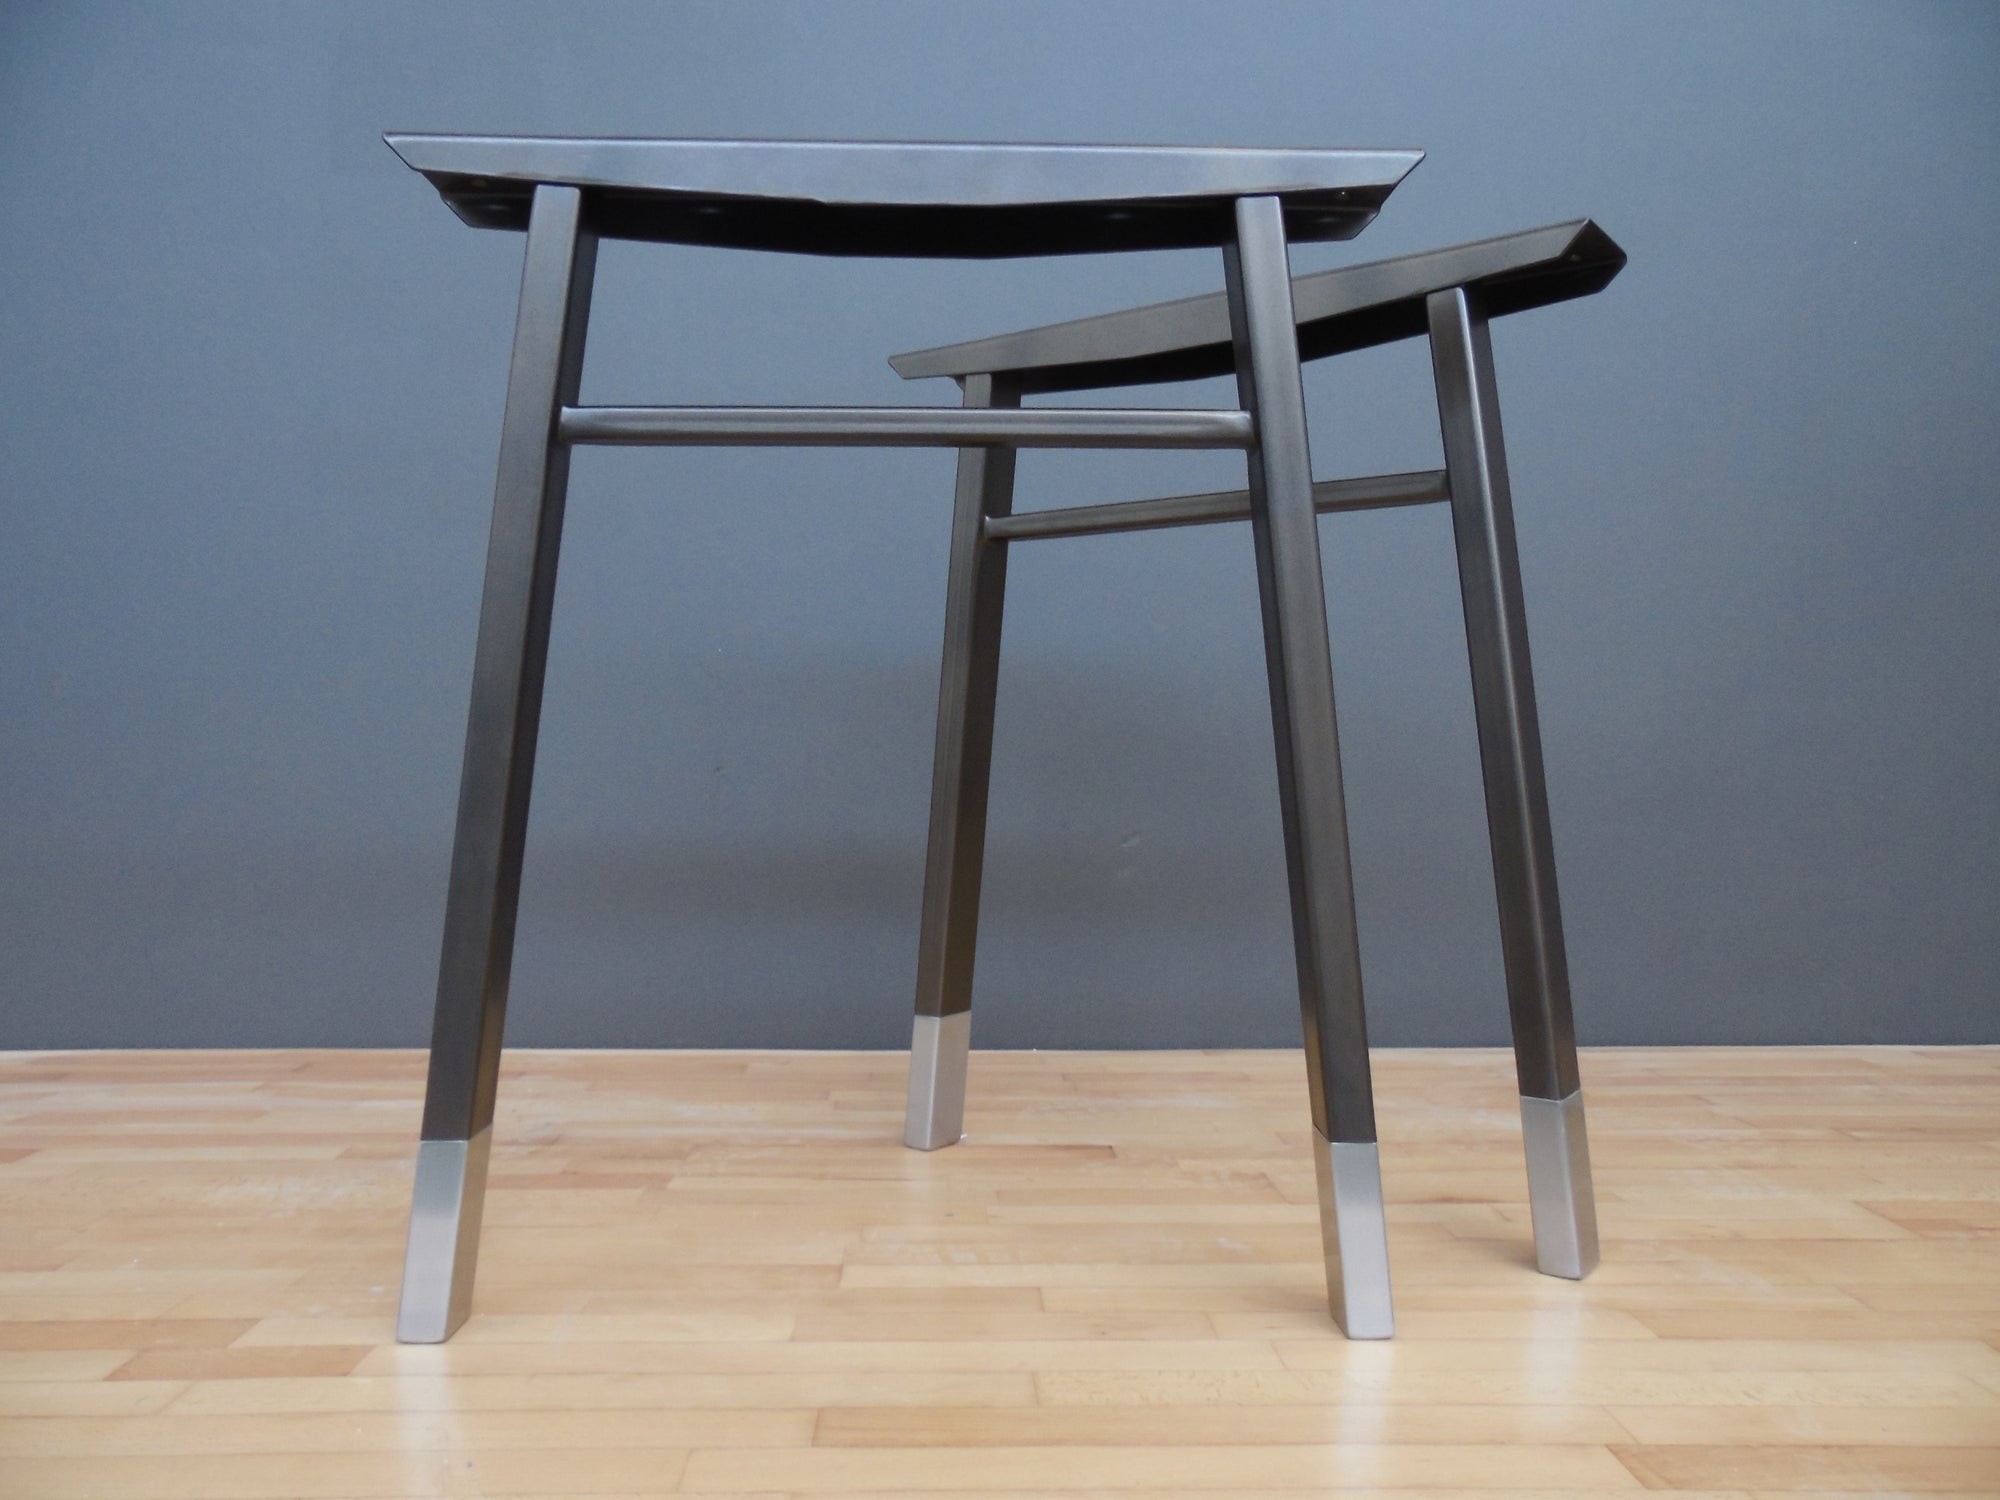 Metal Desk Legs Set ( 2) Kitchen Table Legs Brass Furniture Legs By Balasagun